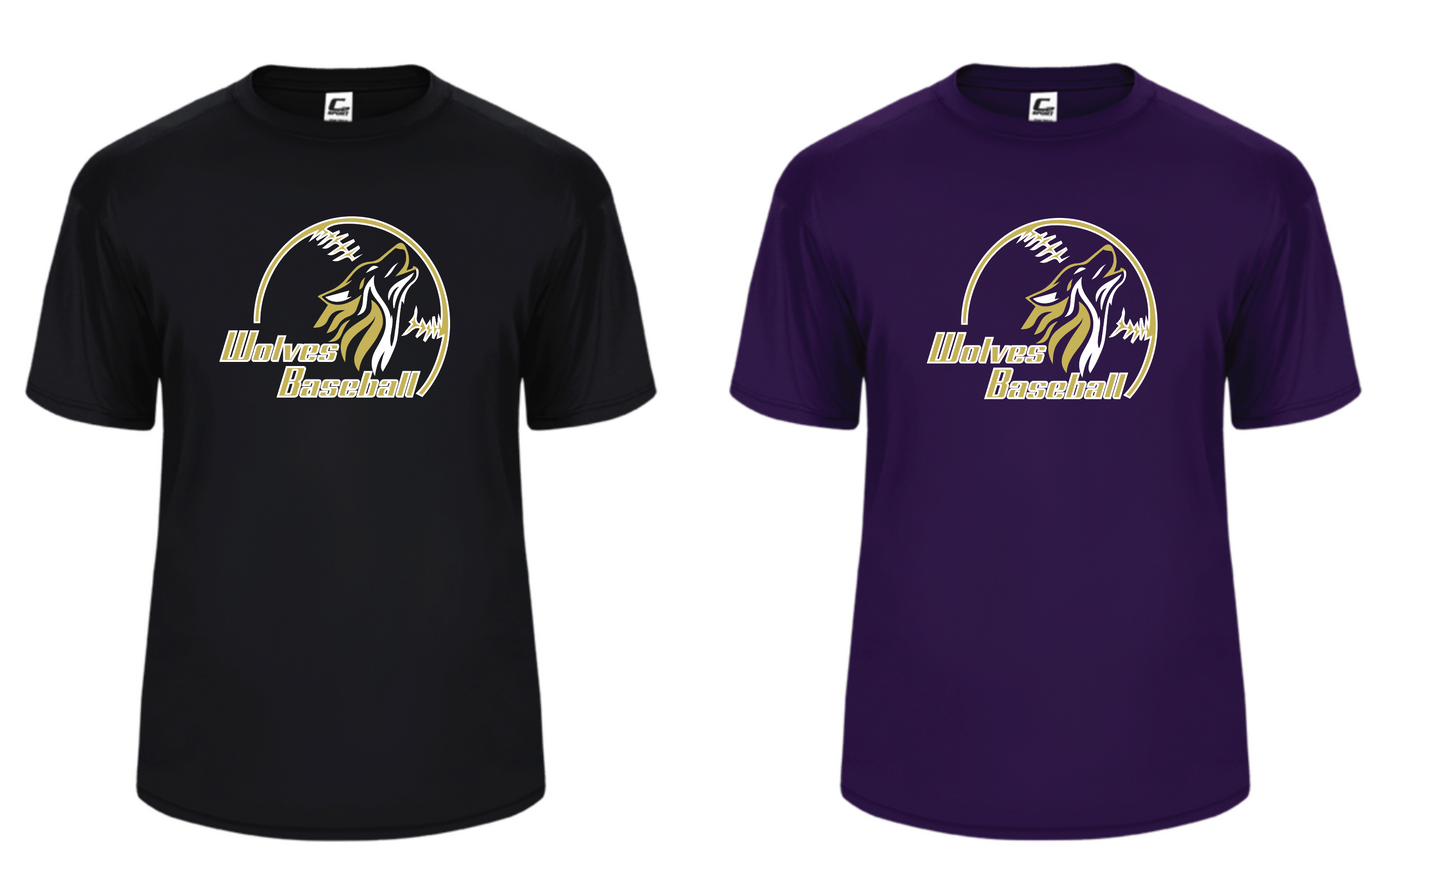 Practice Shirts - Purple and Black (2 Shirts)